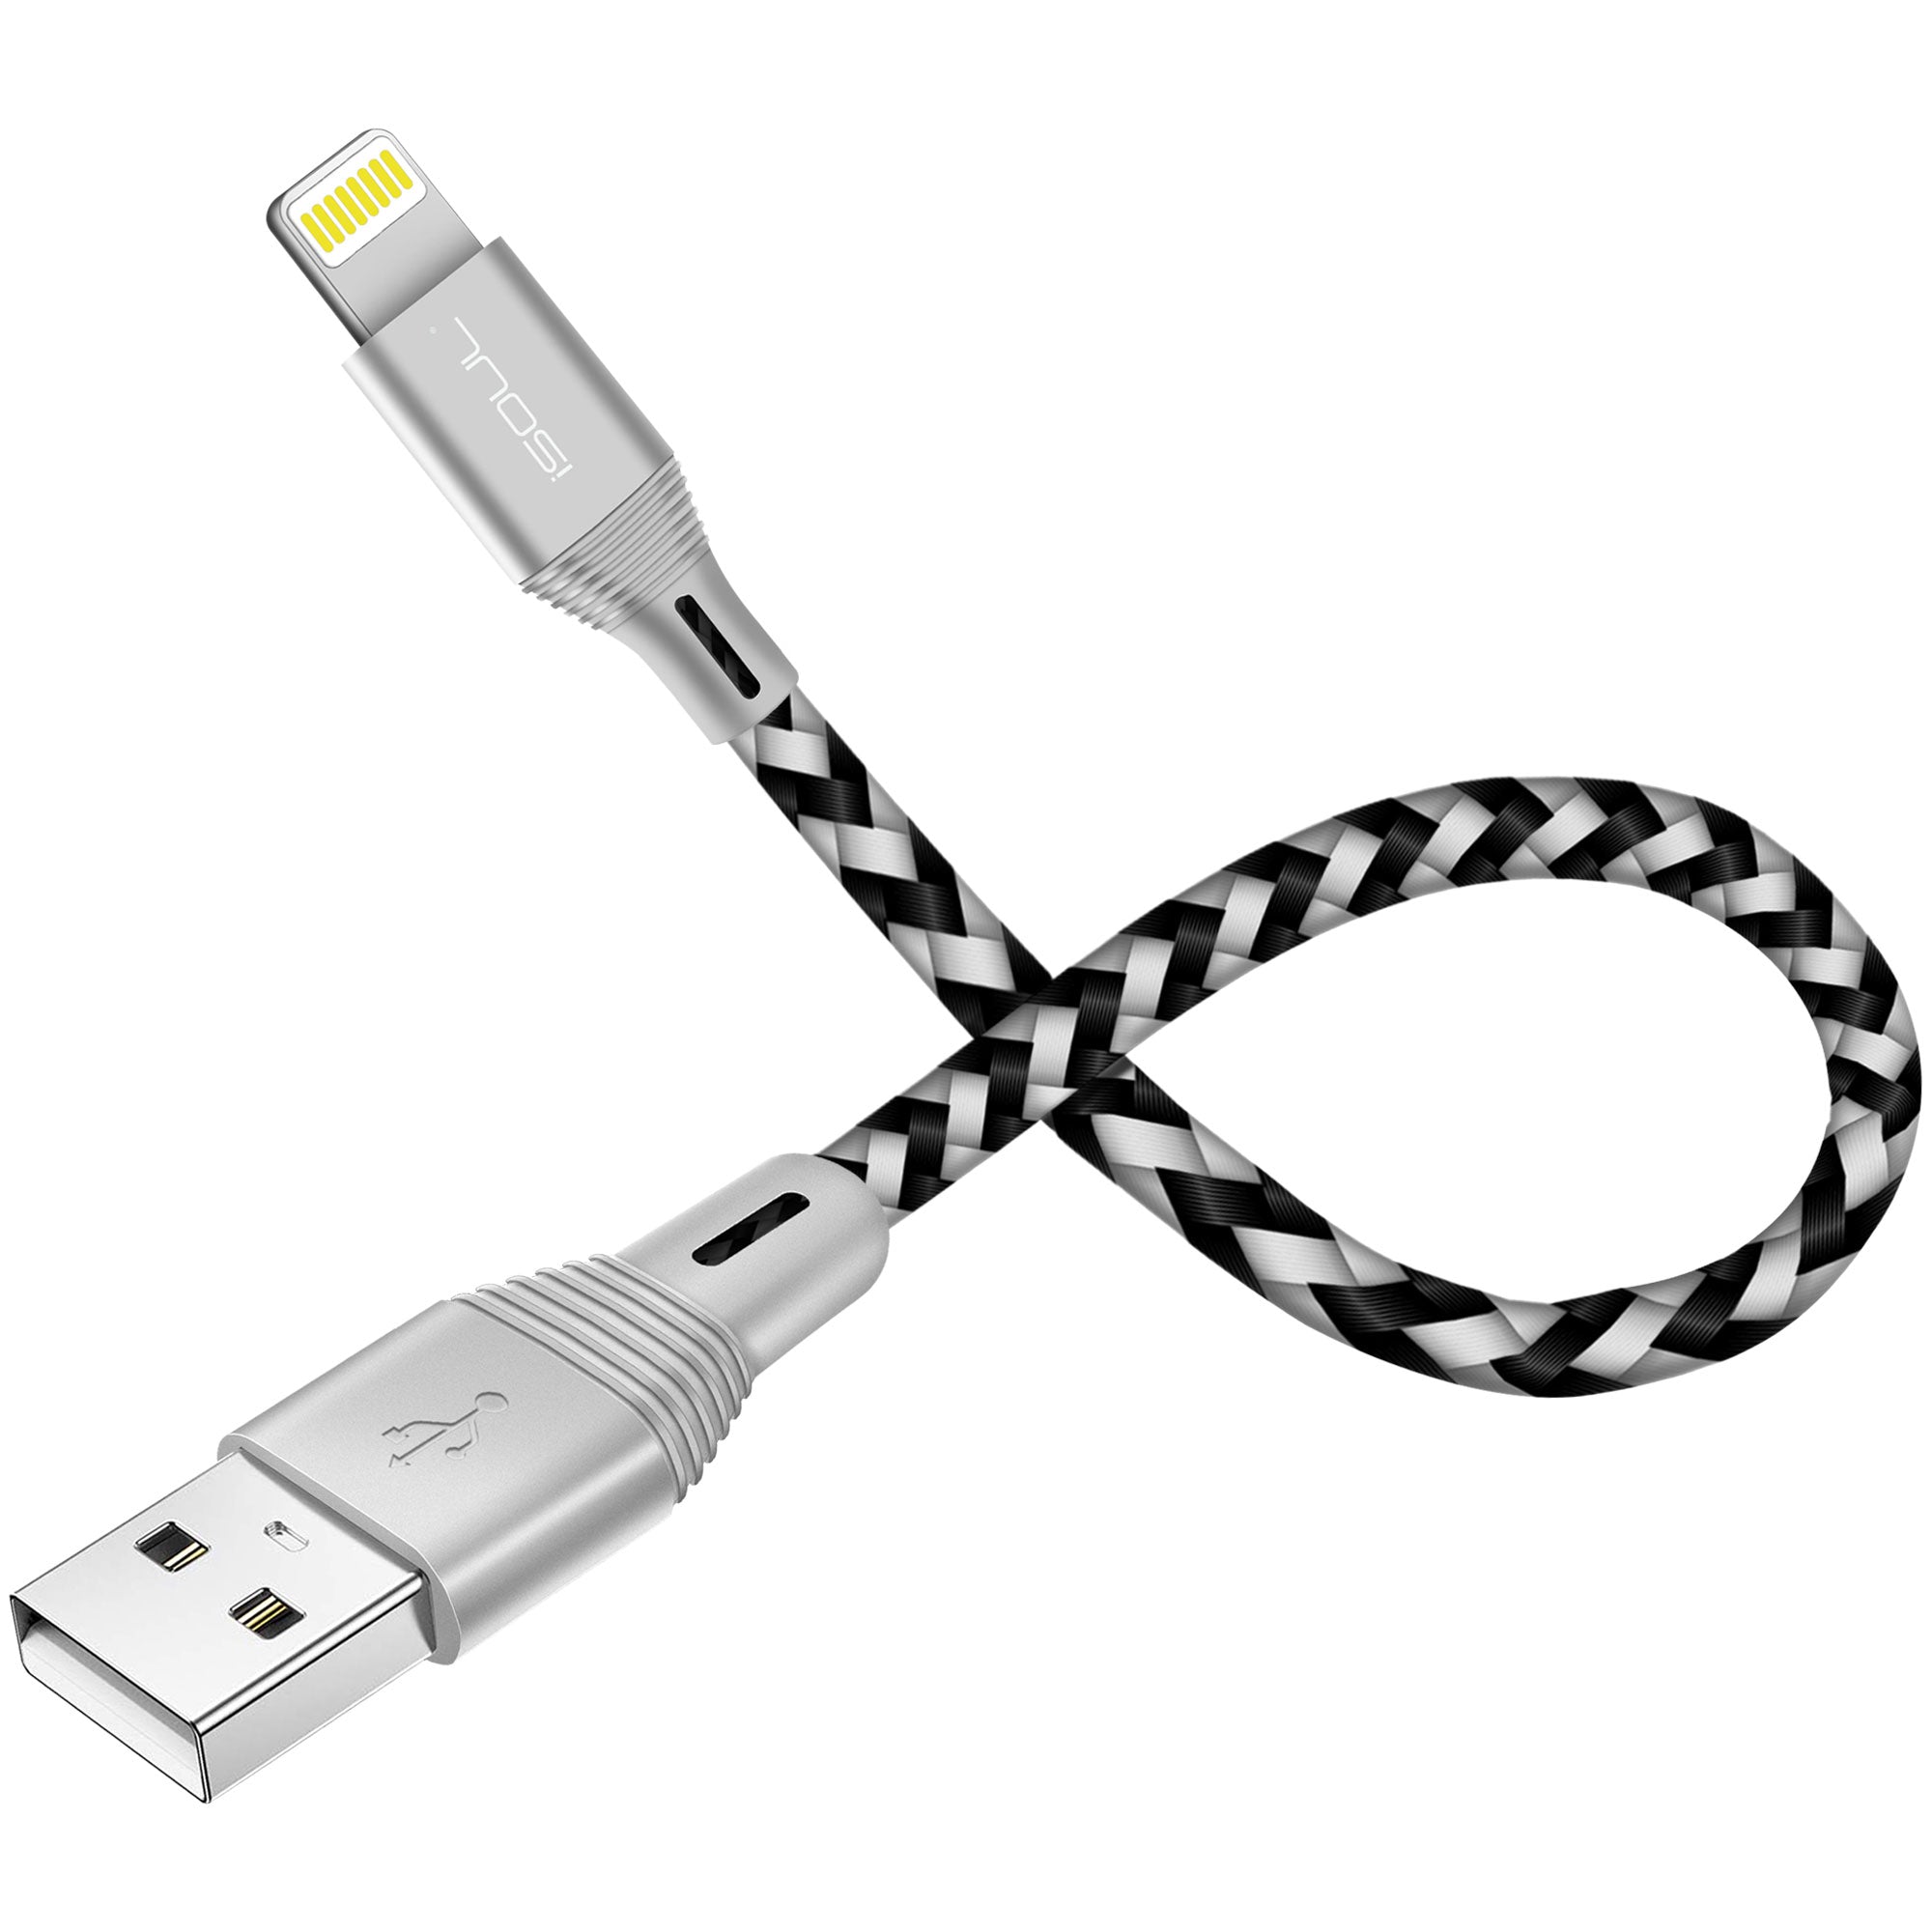 15cm Lightning Apple MFI Certified USB Data Cable - iSOUL